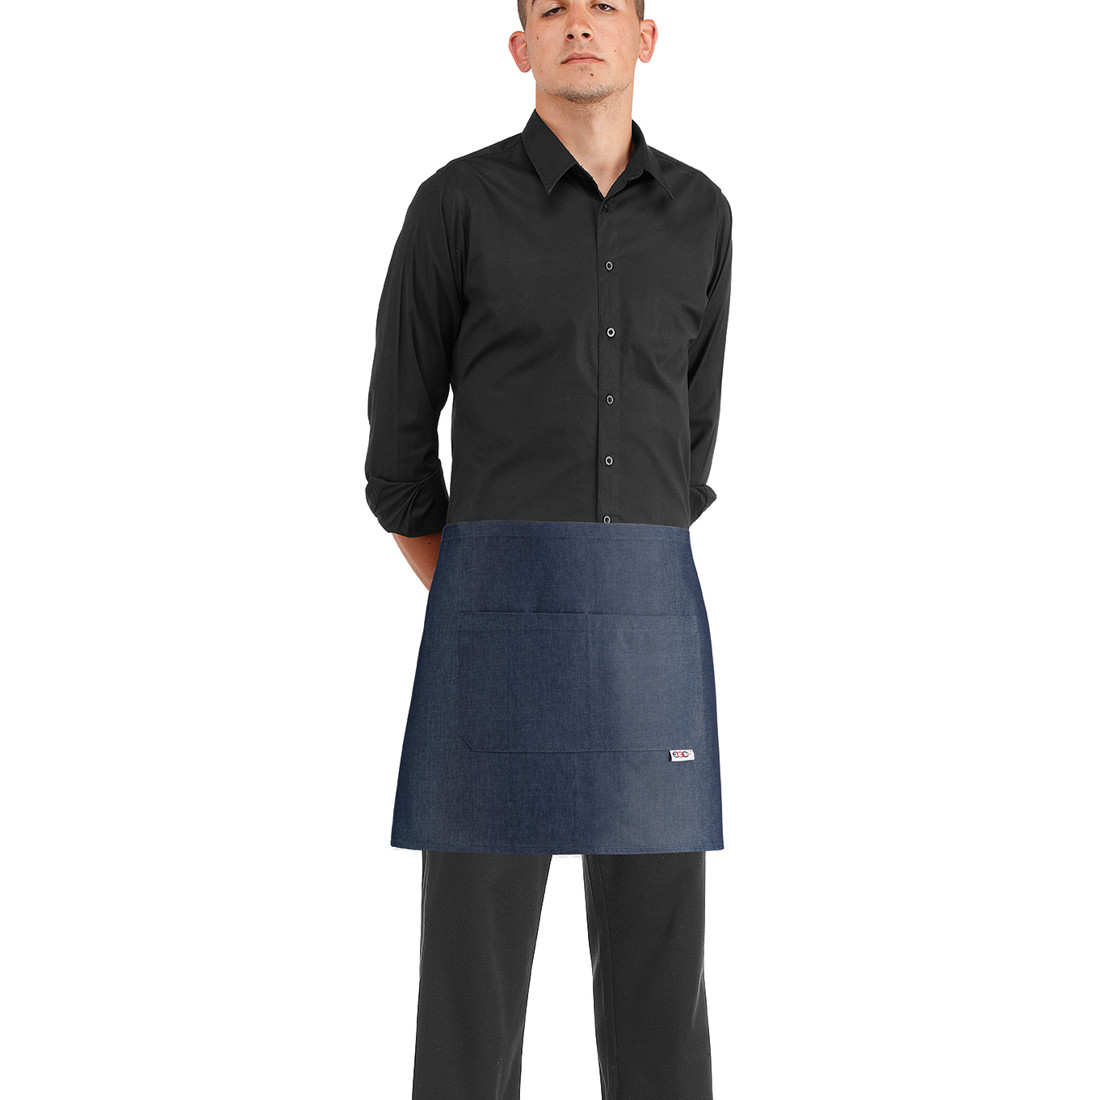 Barman Schürze - Arbeitskleidung